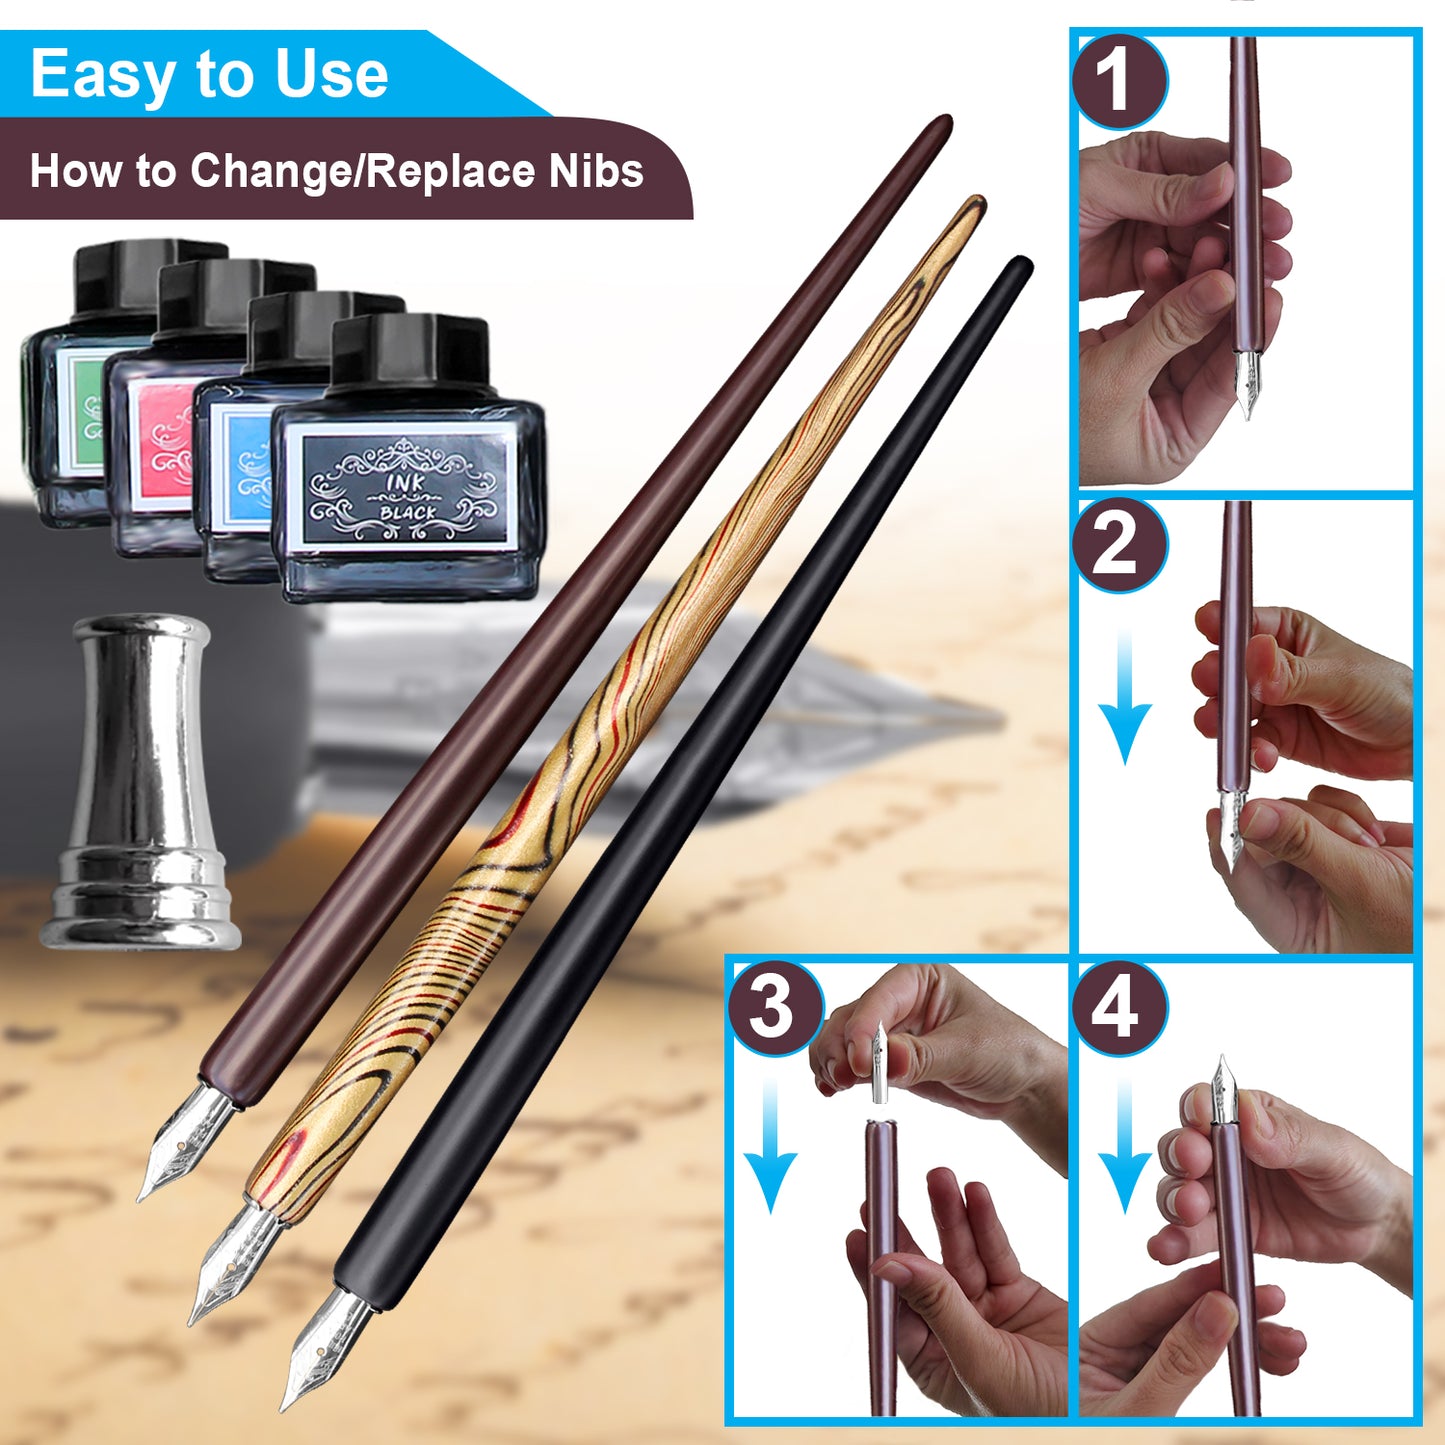 Highergo Glitter Crystal Glass Pen Set Gradient Dip Pen Ink Calligraphy Kits  for Girls Gifts Writing